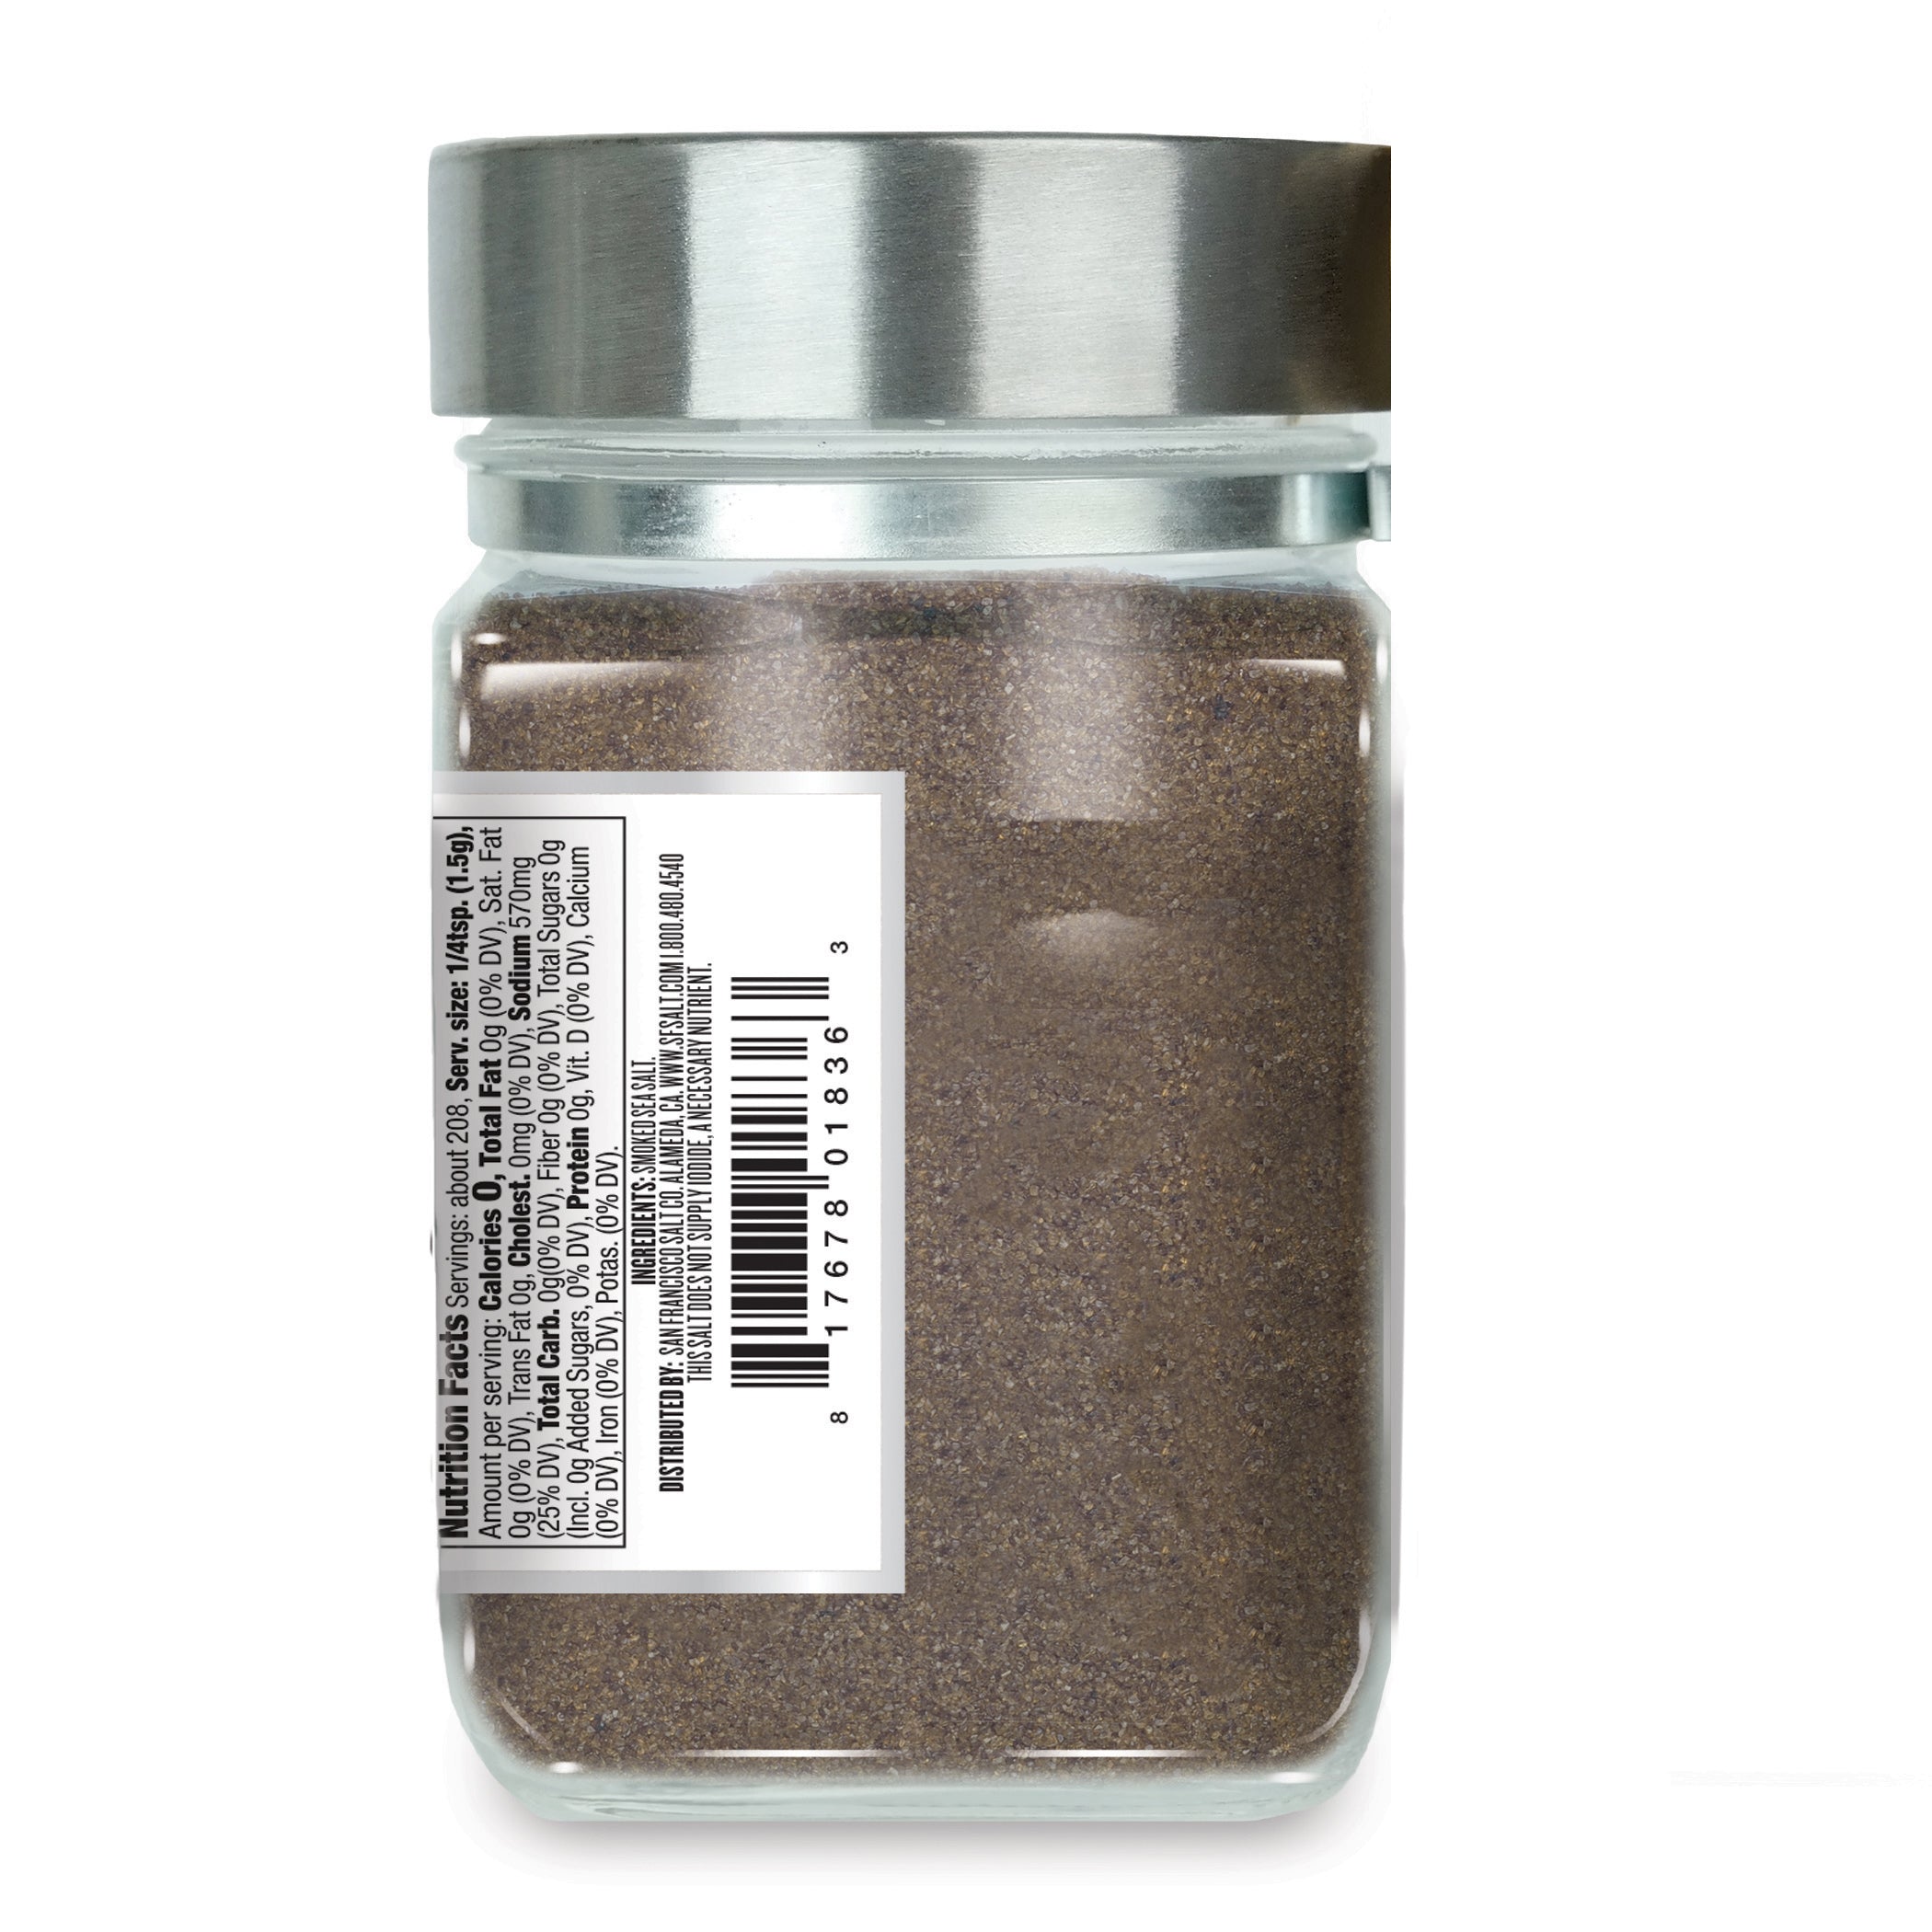 Alderwood Smoked Sea Salt - 11 oz. Glass Chef's Jar by San Francisco Salt Company